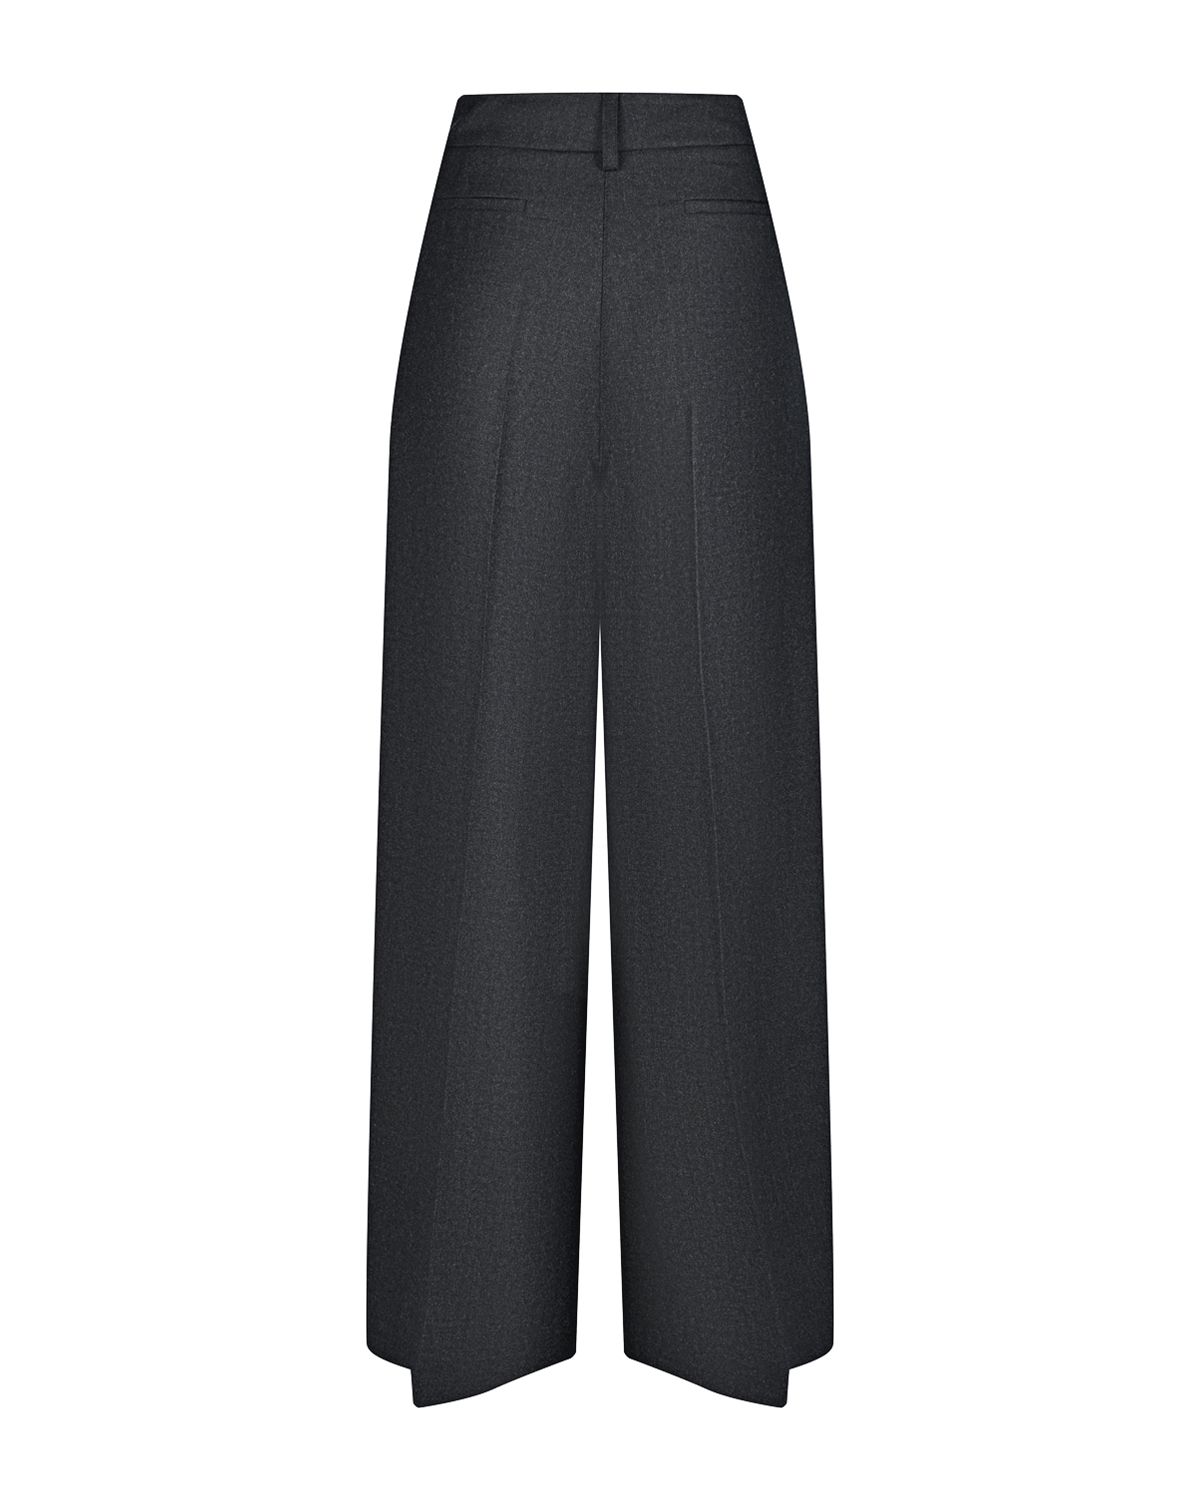 Серые шерстяные брюки палаццо Parosh, размер 42, цвет серый - фото 4